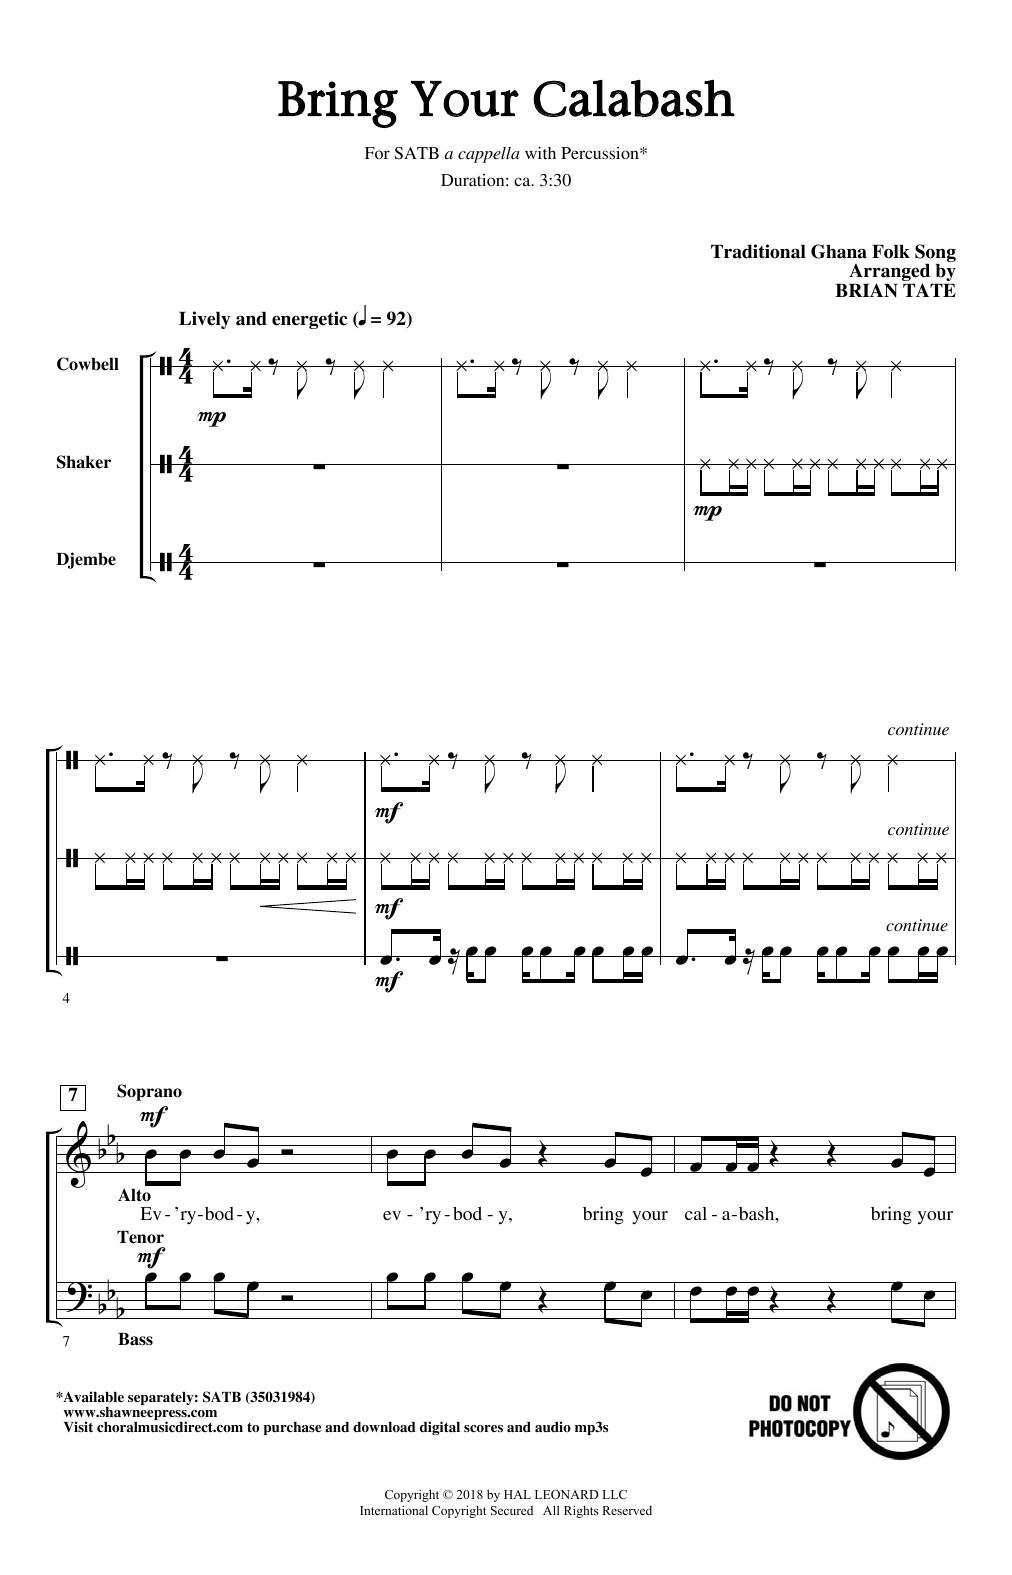 Brian Tate Bring Your Calabash Sheet Music Notes & Chords for SATB - Download or Print PDF